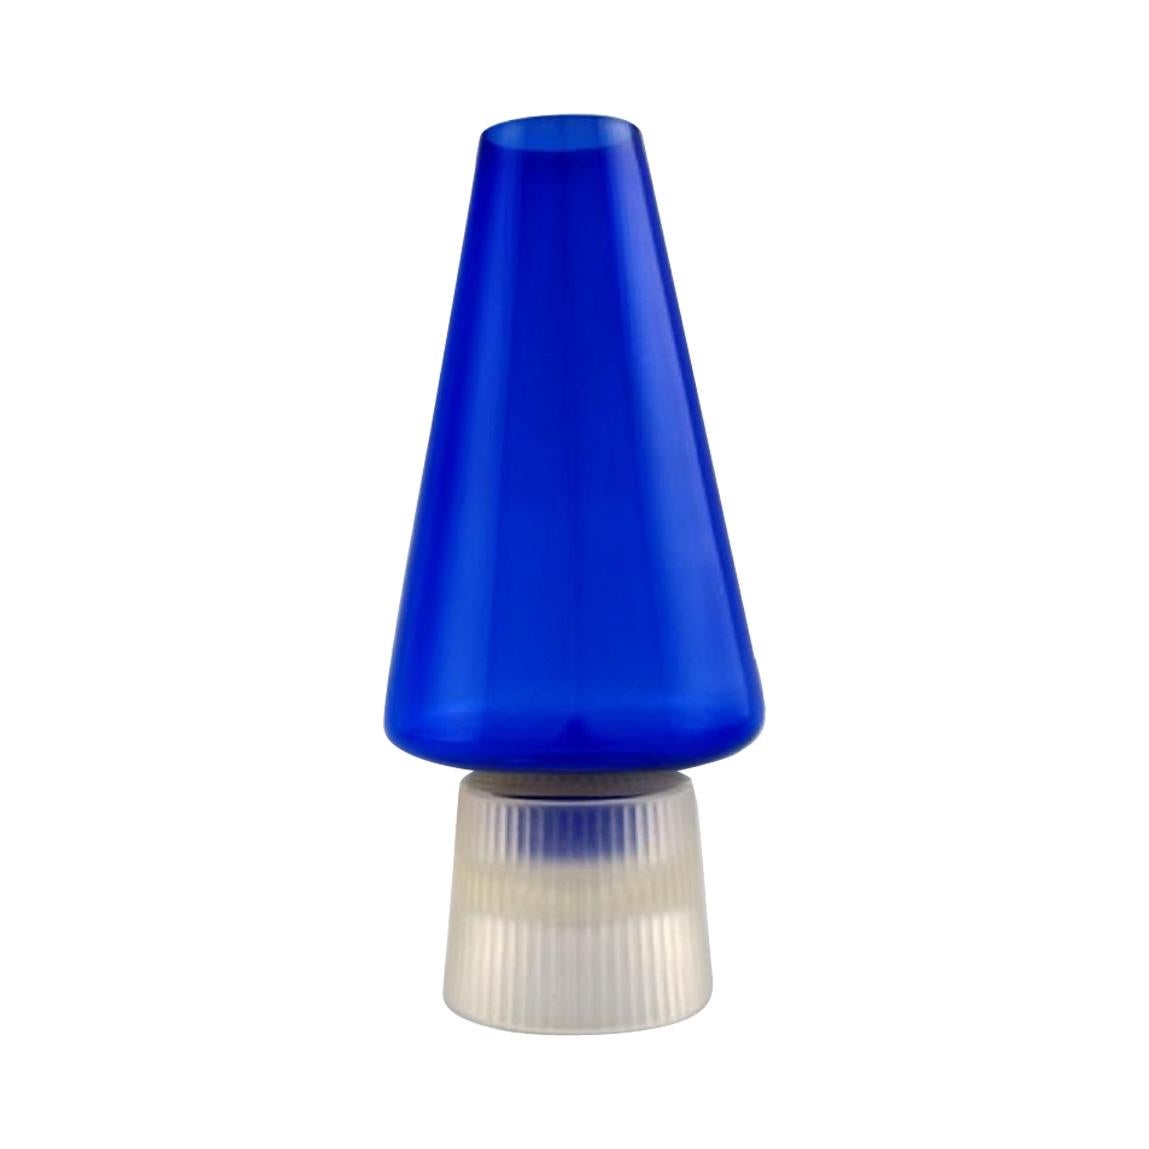 Per Lütken for Holmegaard. Rare "Hygge" Lamp for Candles in Blue For Sale